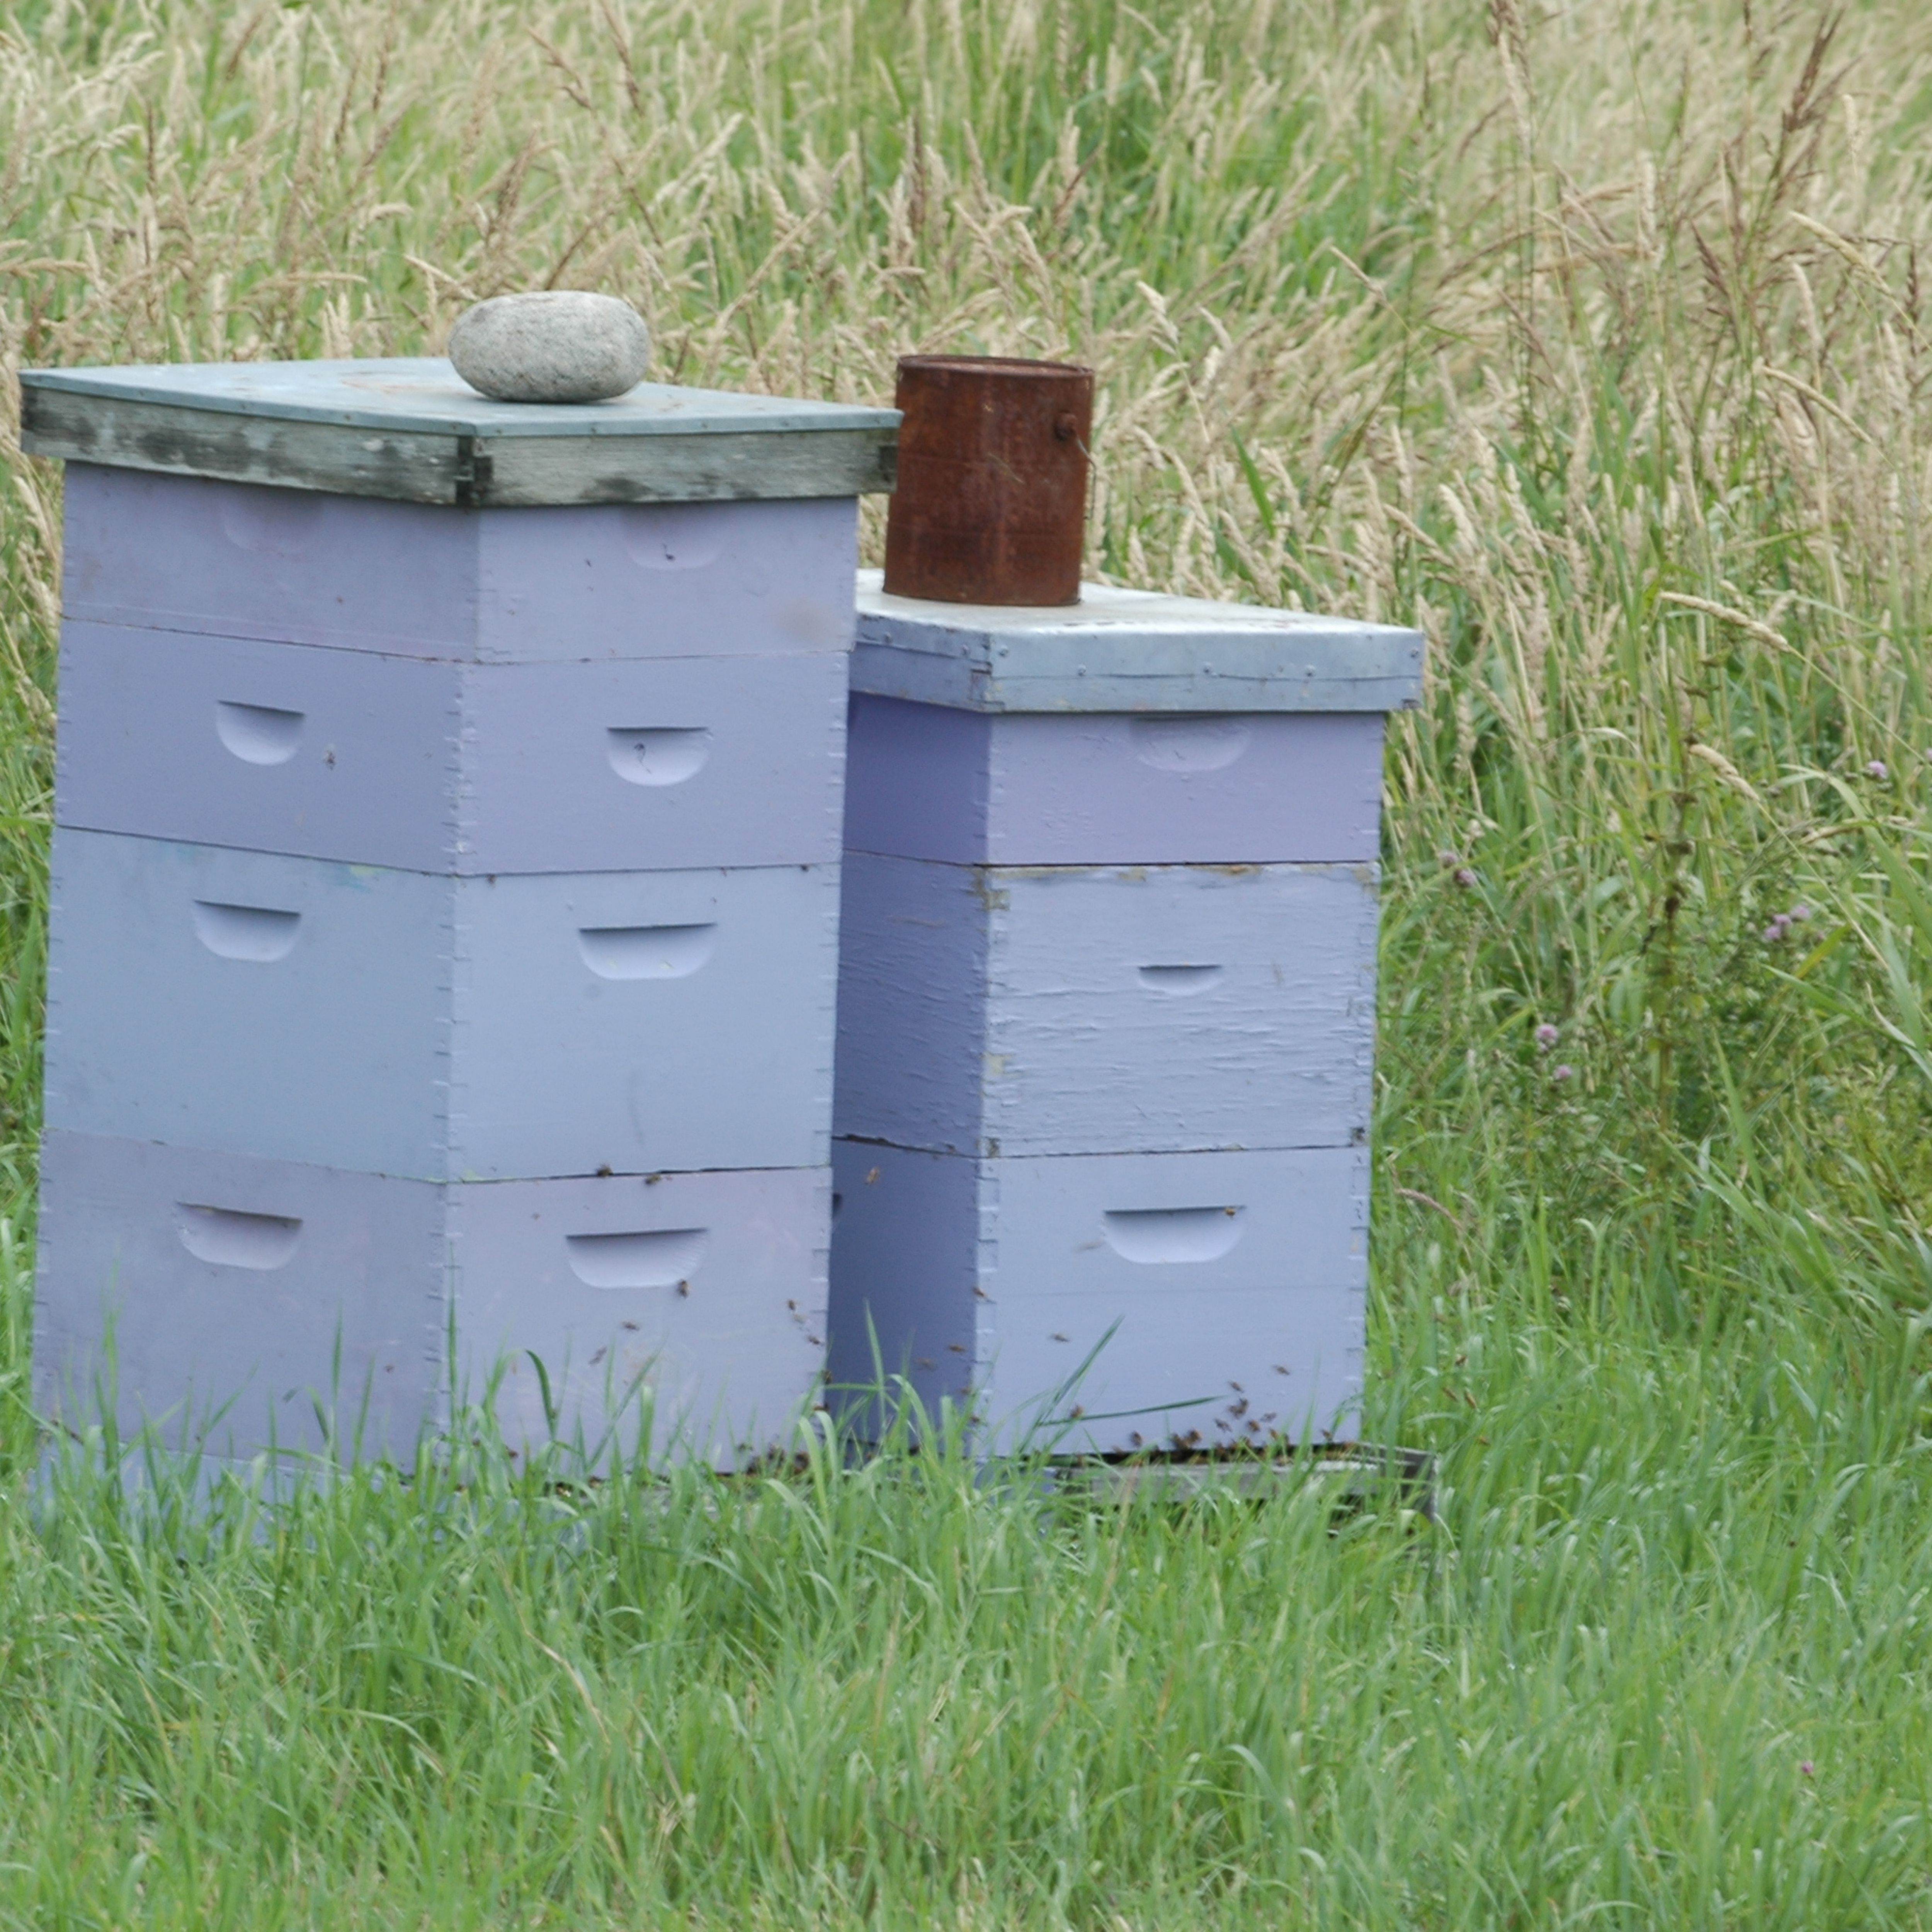 beehive on grass